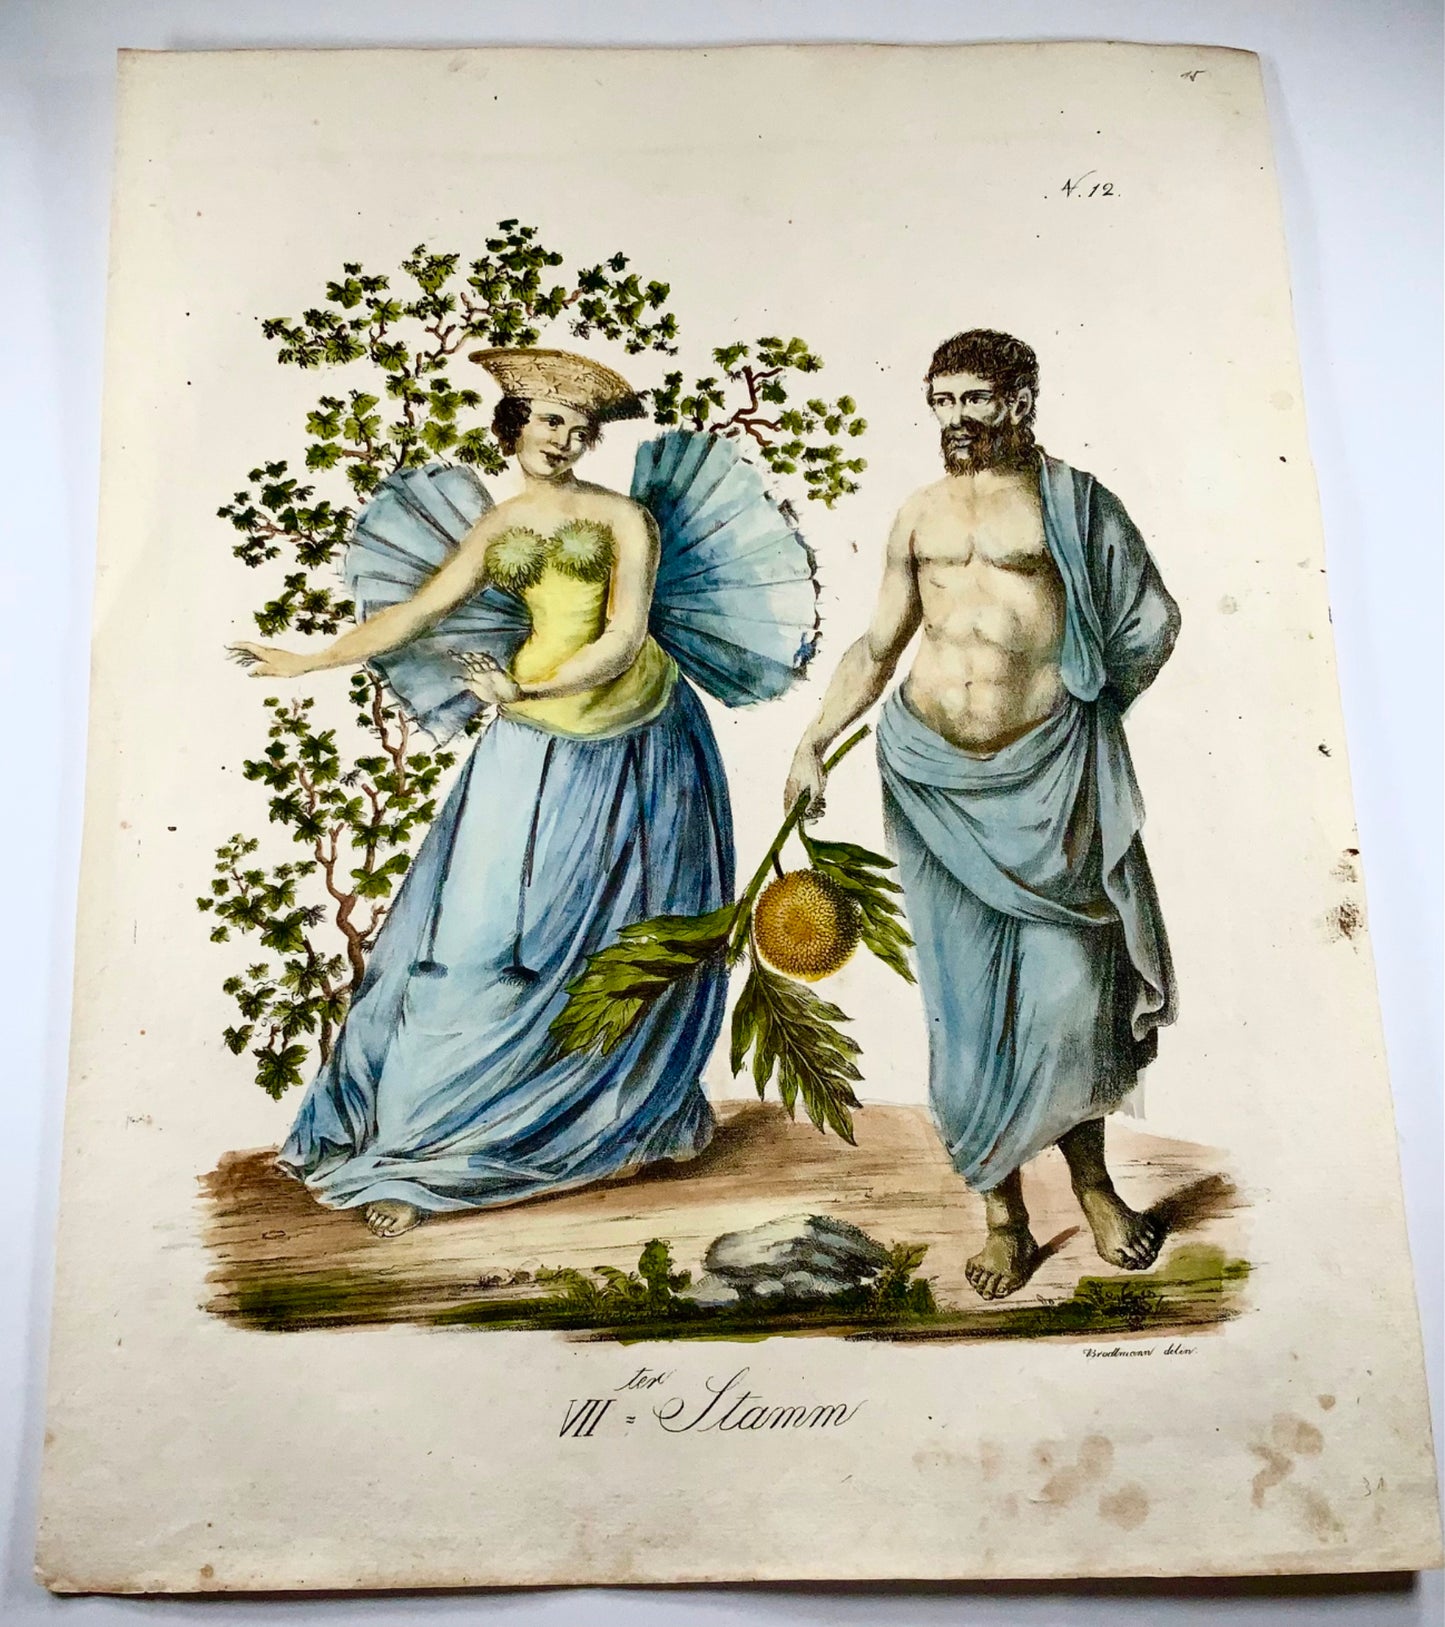 1816 Brodtmann POLYNESIANS Imp. folio 42.5 cm 'Incunabula of Lithography' - Ethnology